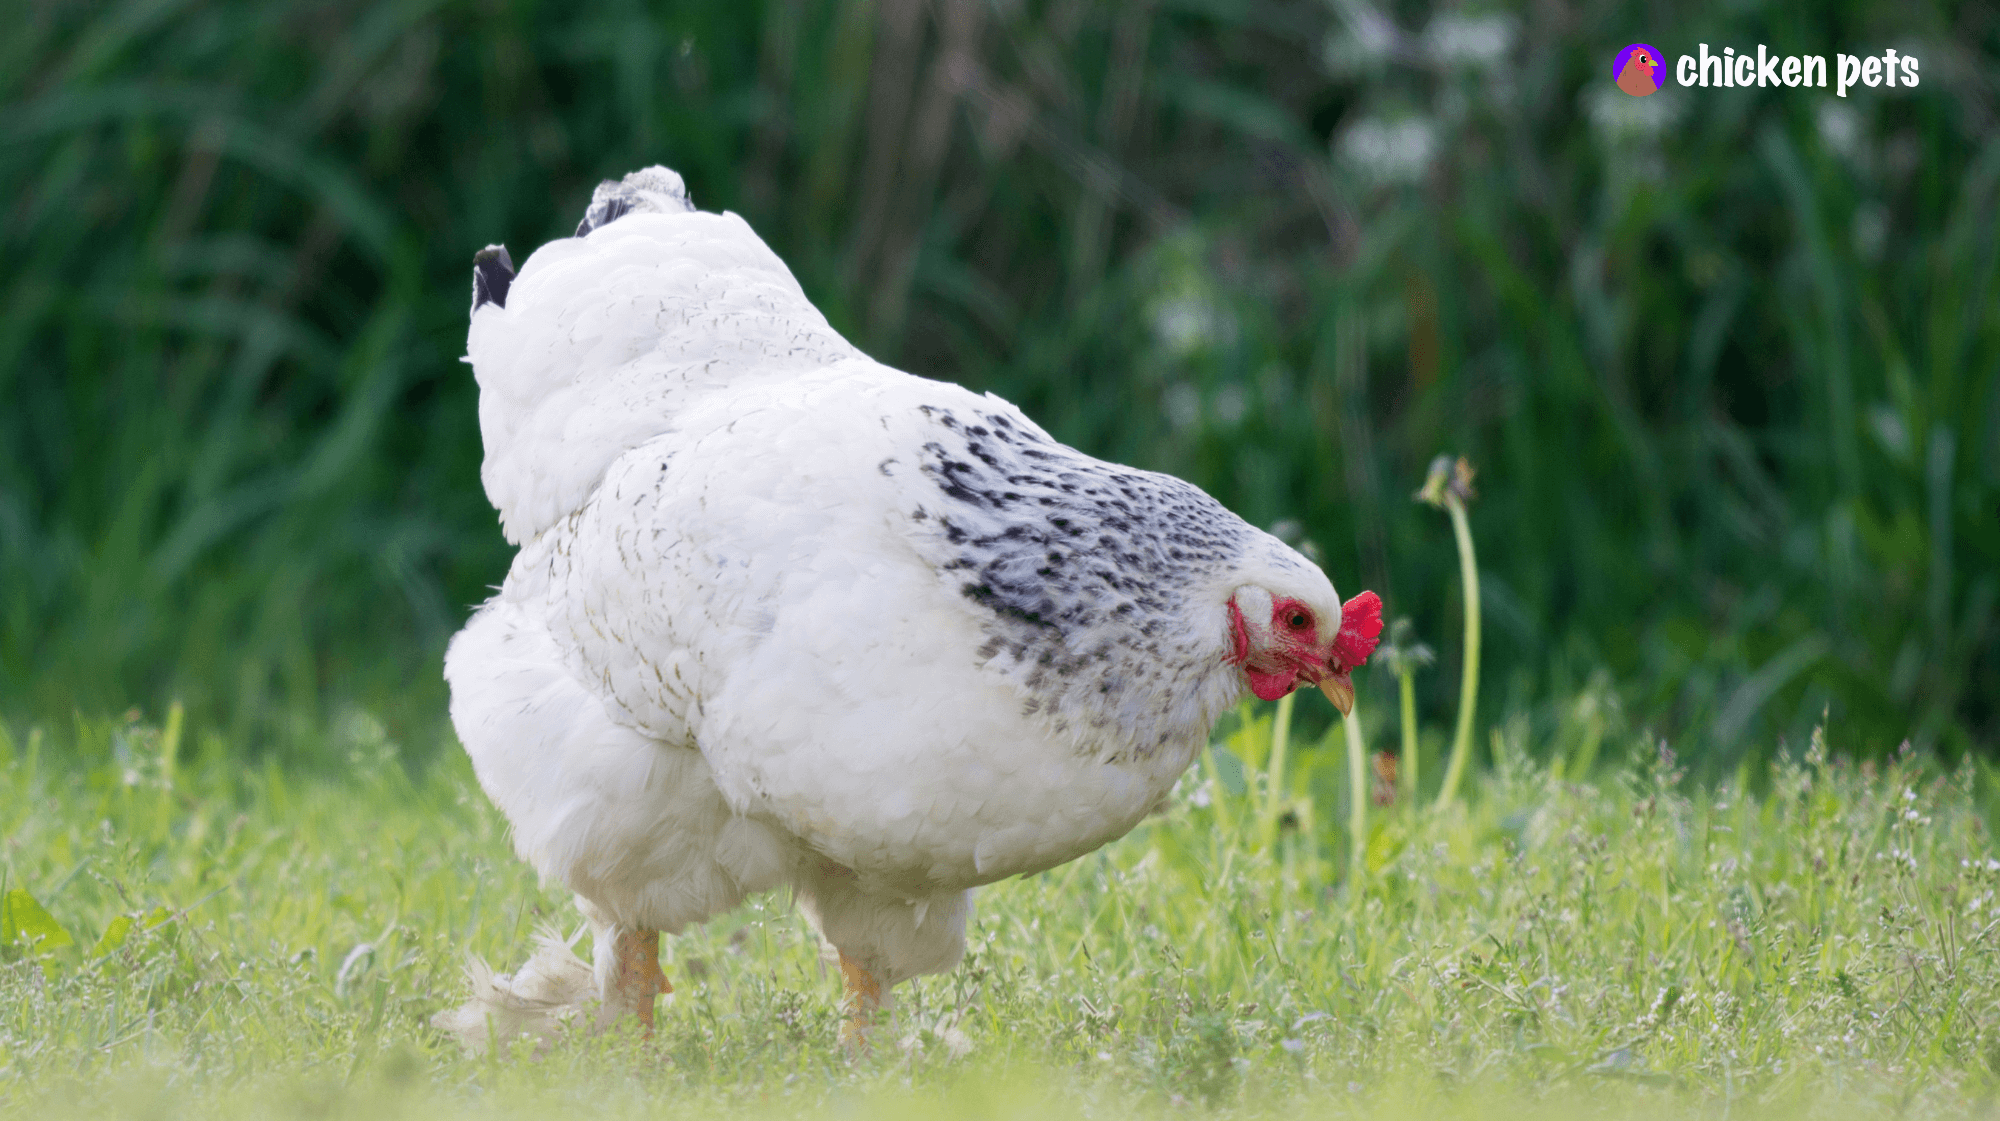 columbian wyandotte chicken breed